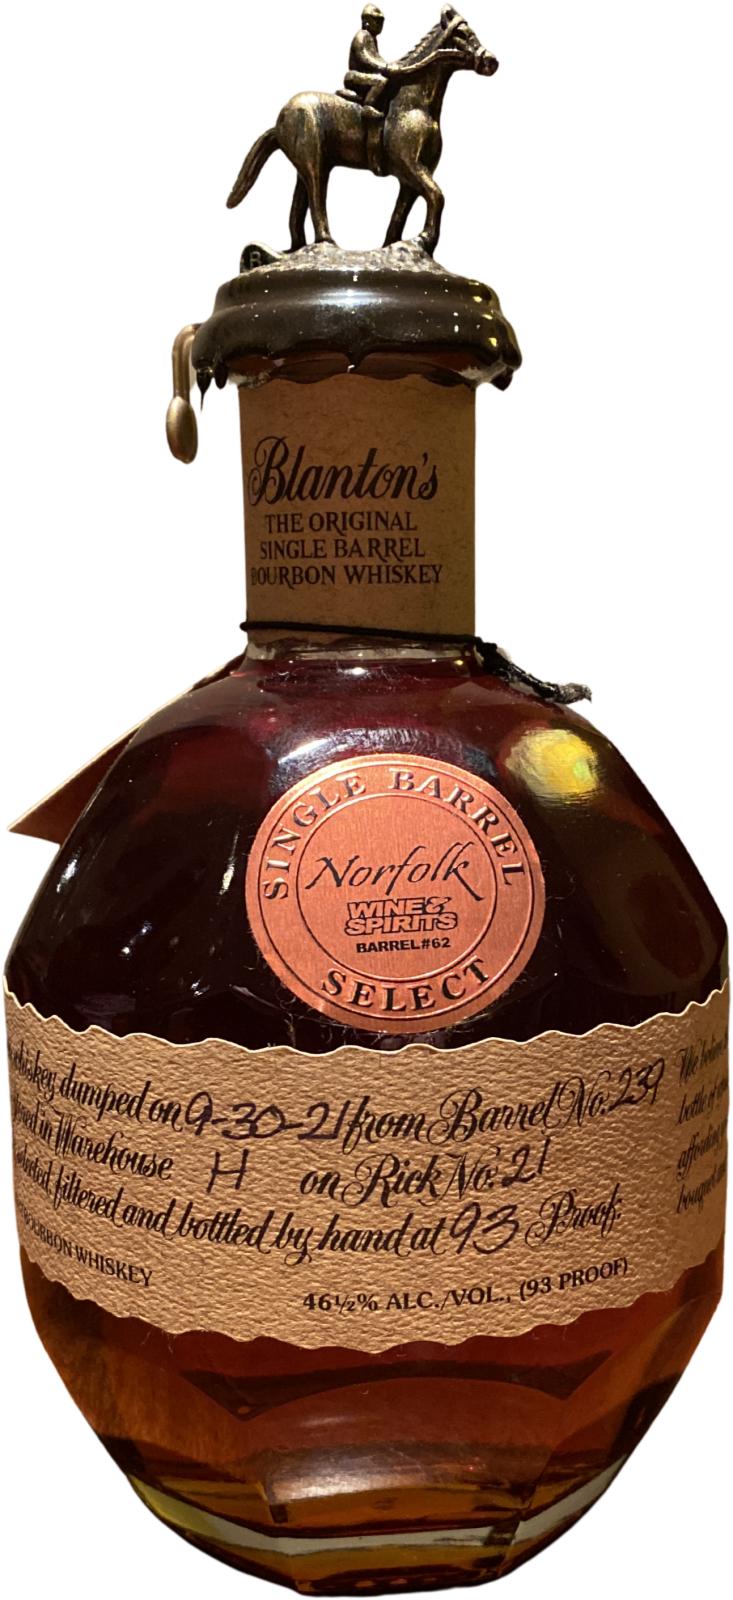 Blanton's The Original Single Barrel Bourbon Whisky #4 Charred American Oak Barrel Norfolk Wine & Spirits 46.5% 750ml